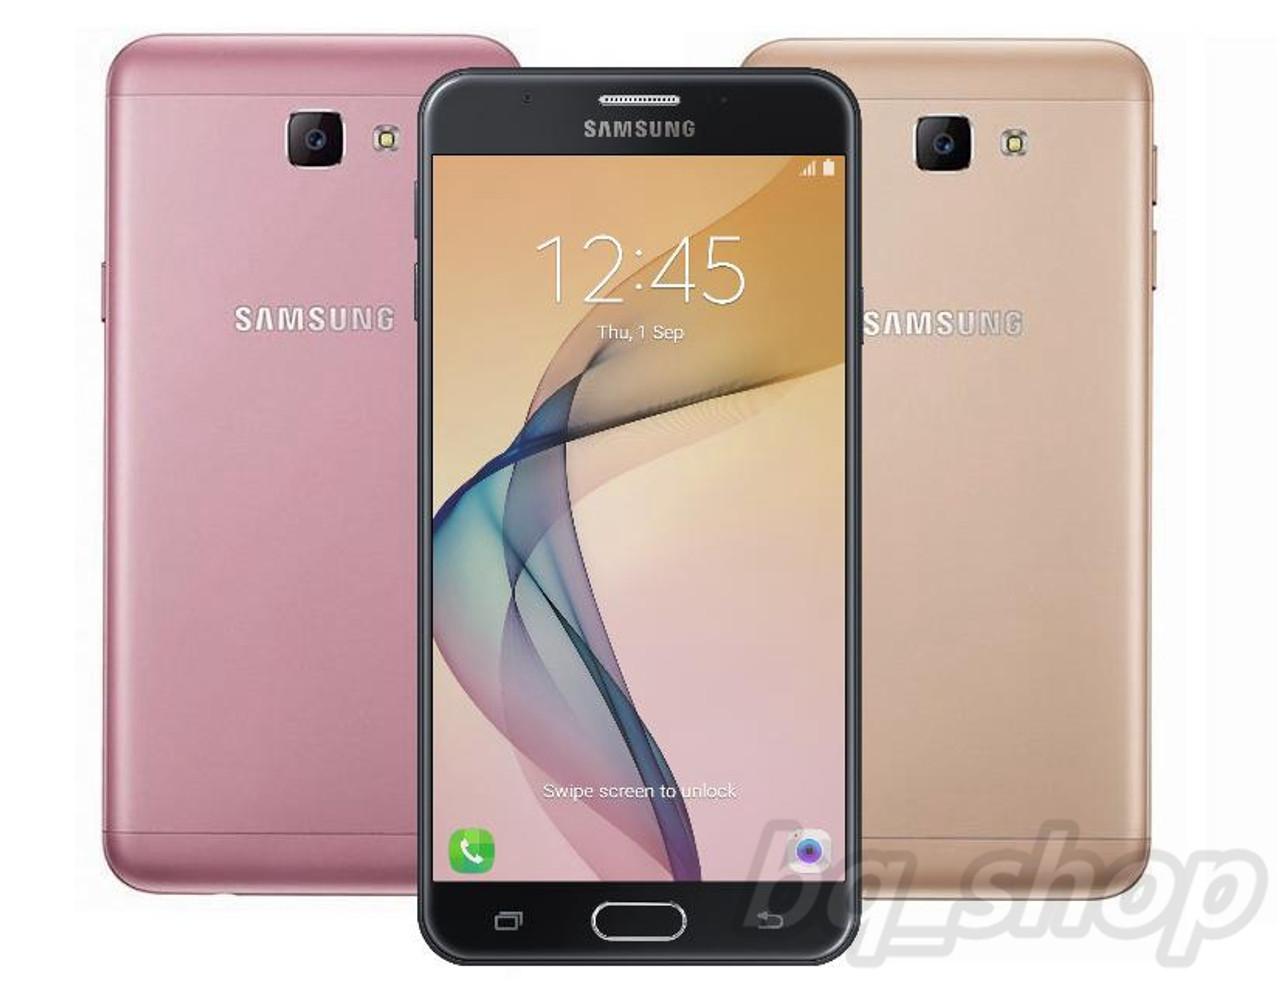 Harga Samsung Galaxy J5 2016 Murah Terbaru Dan Spesifikasi